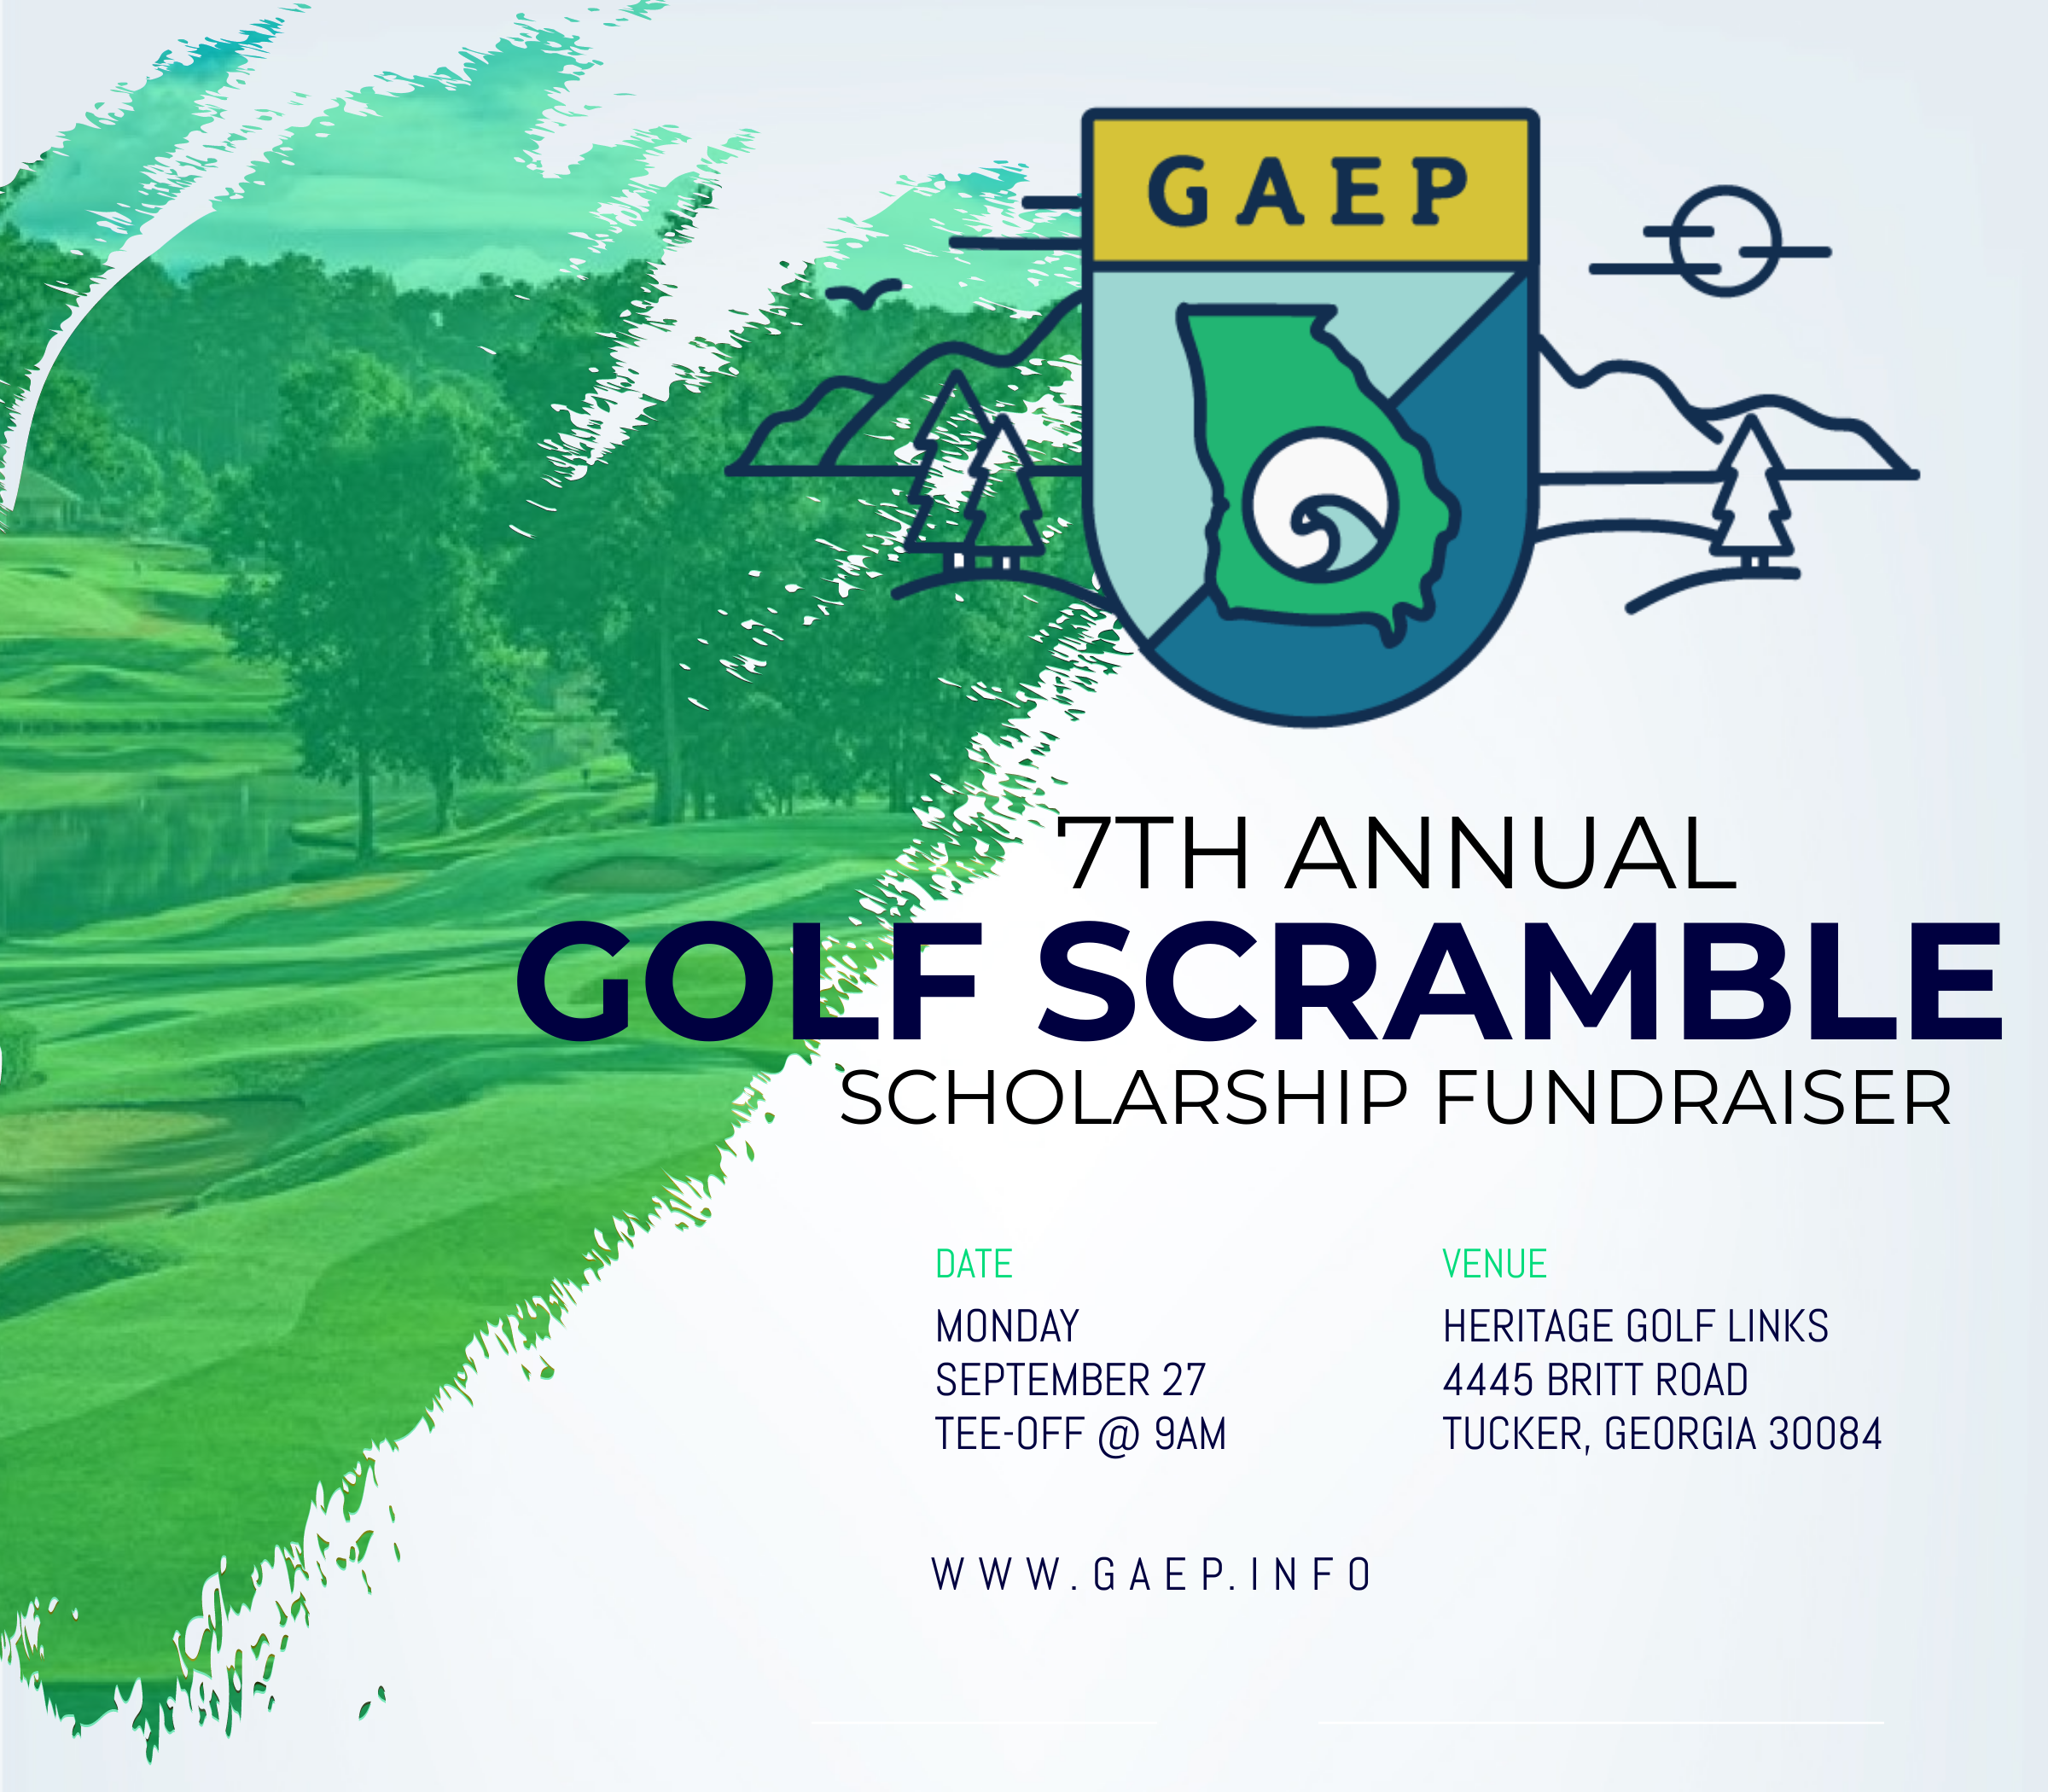 GAEP 7th Annual Golf Scramble